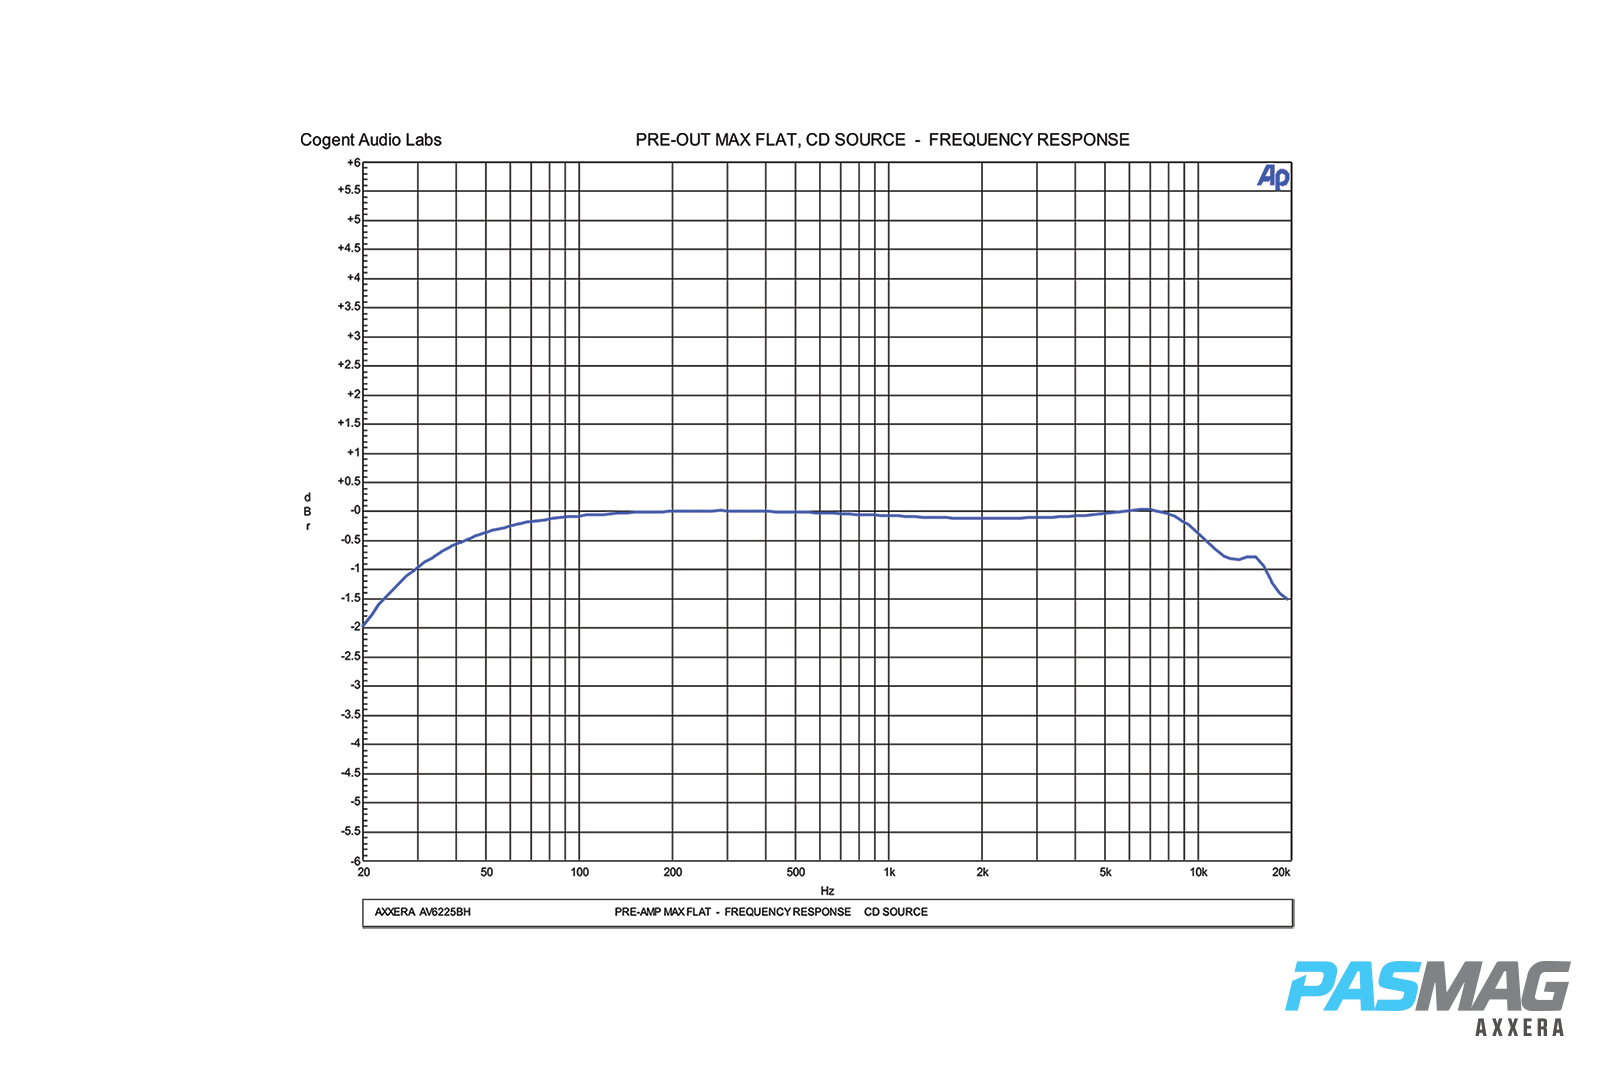 Axxera AV6225BH PASMAG Test Report 11